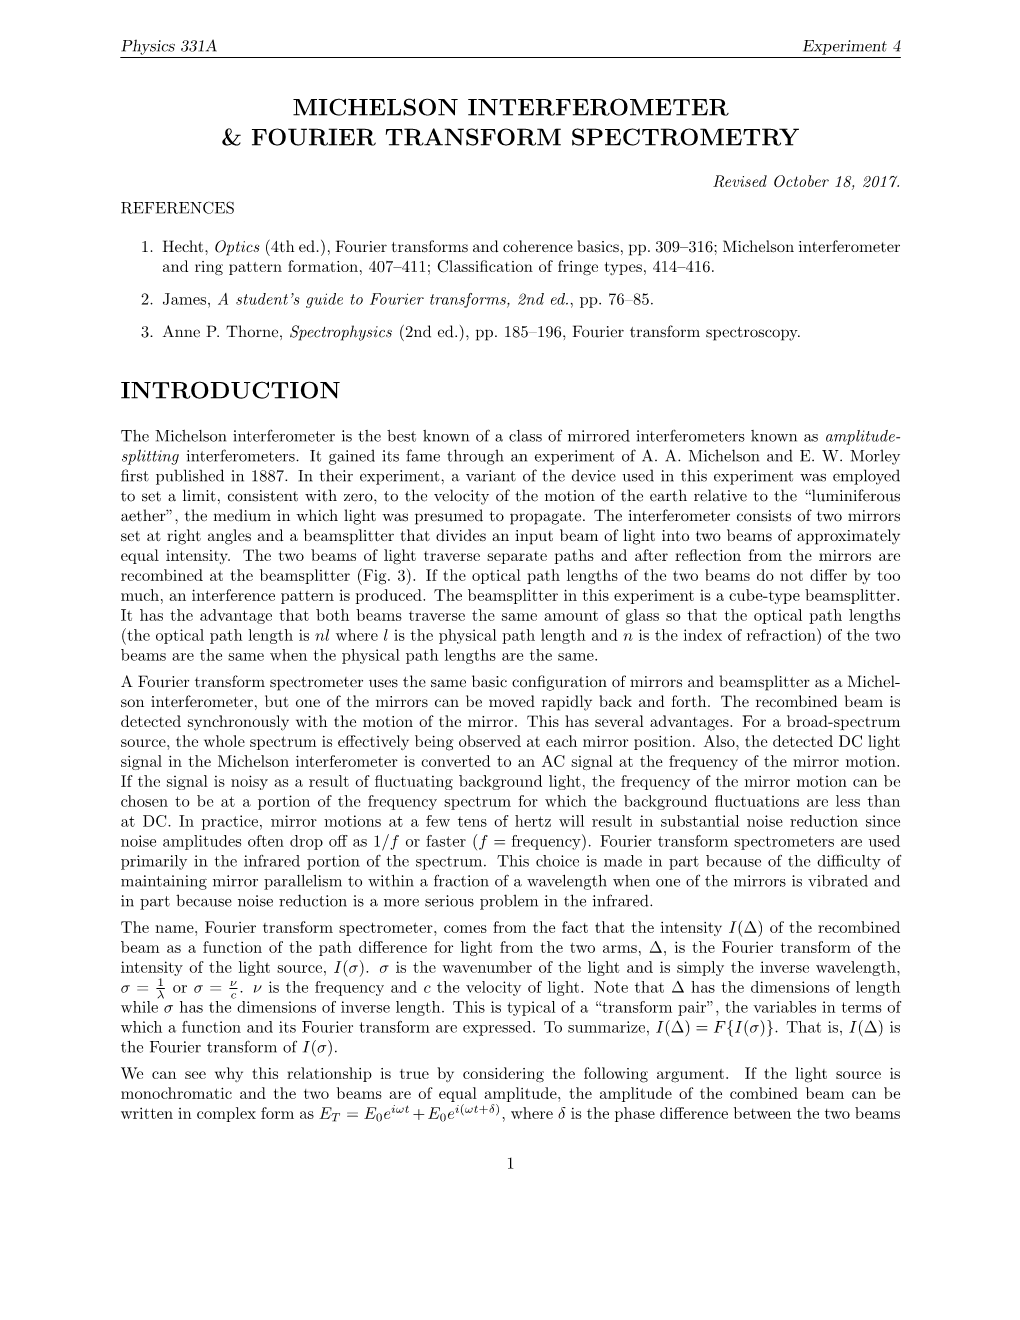 Michelson Interferometer & Fourier Transform Spectrometry Introduction